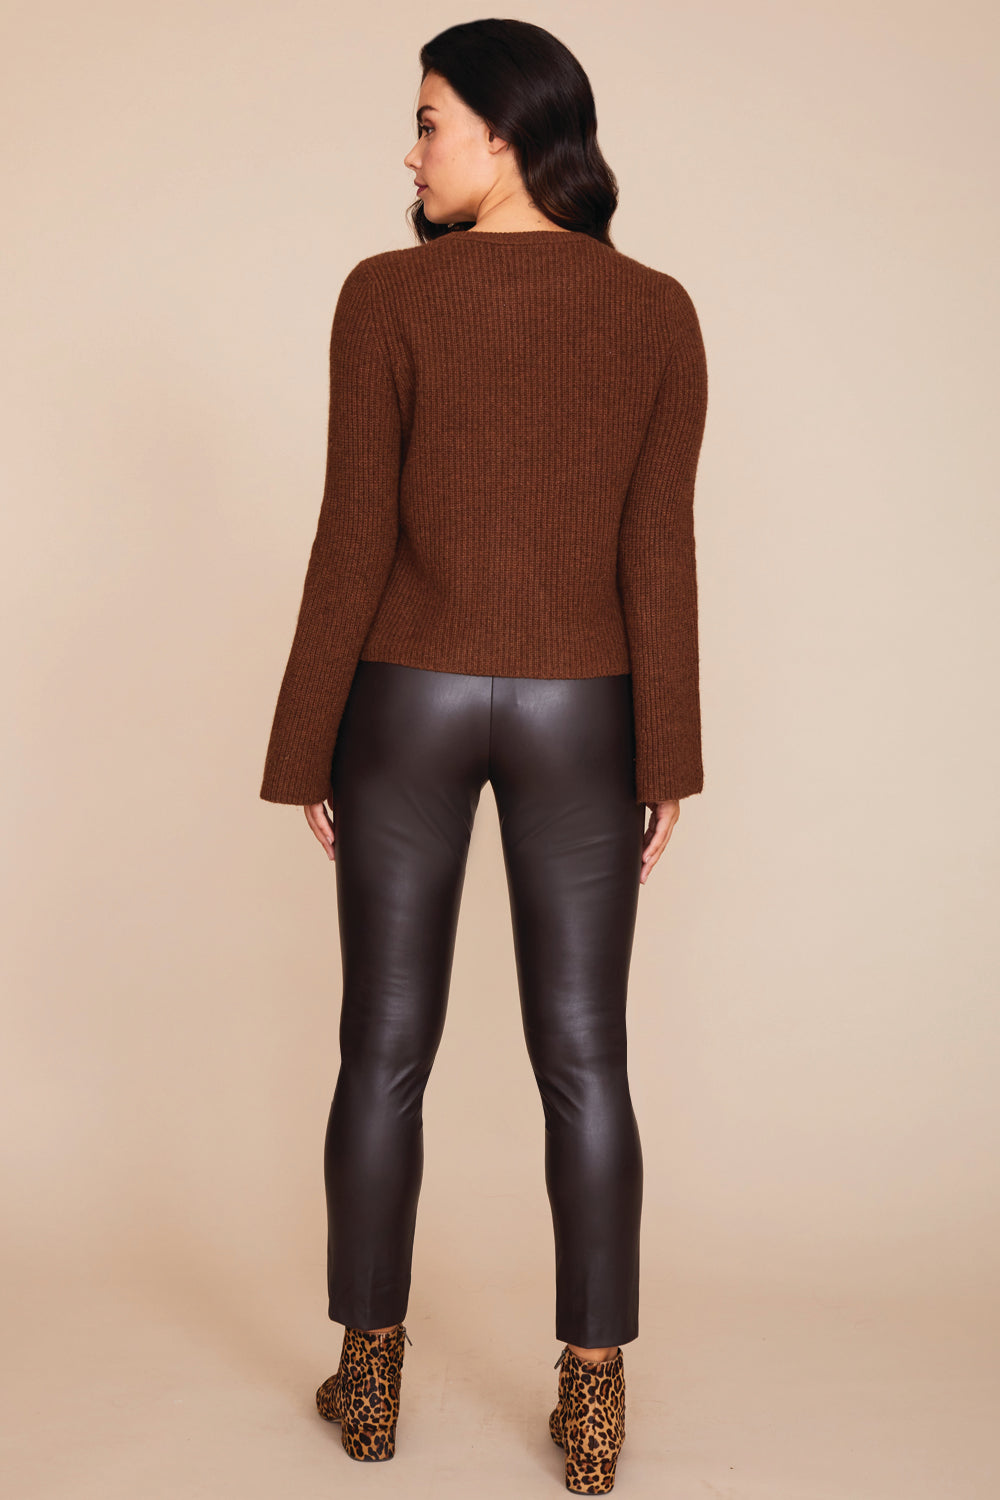 Sloane Pant - Faux Leather- FINAL SALE